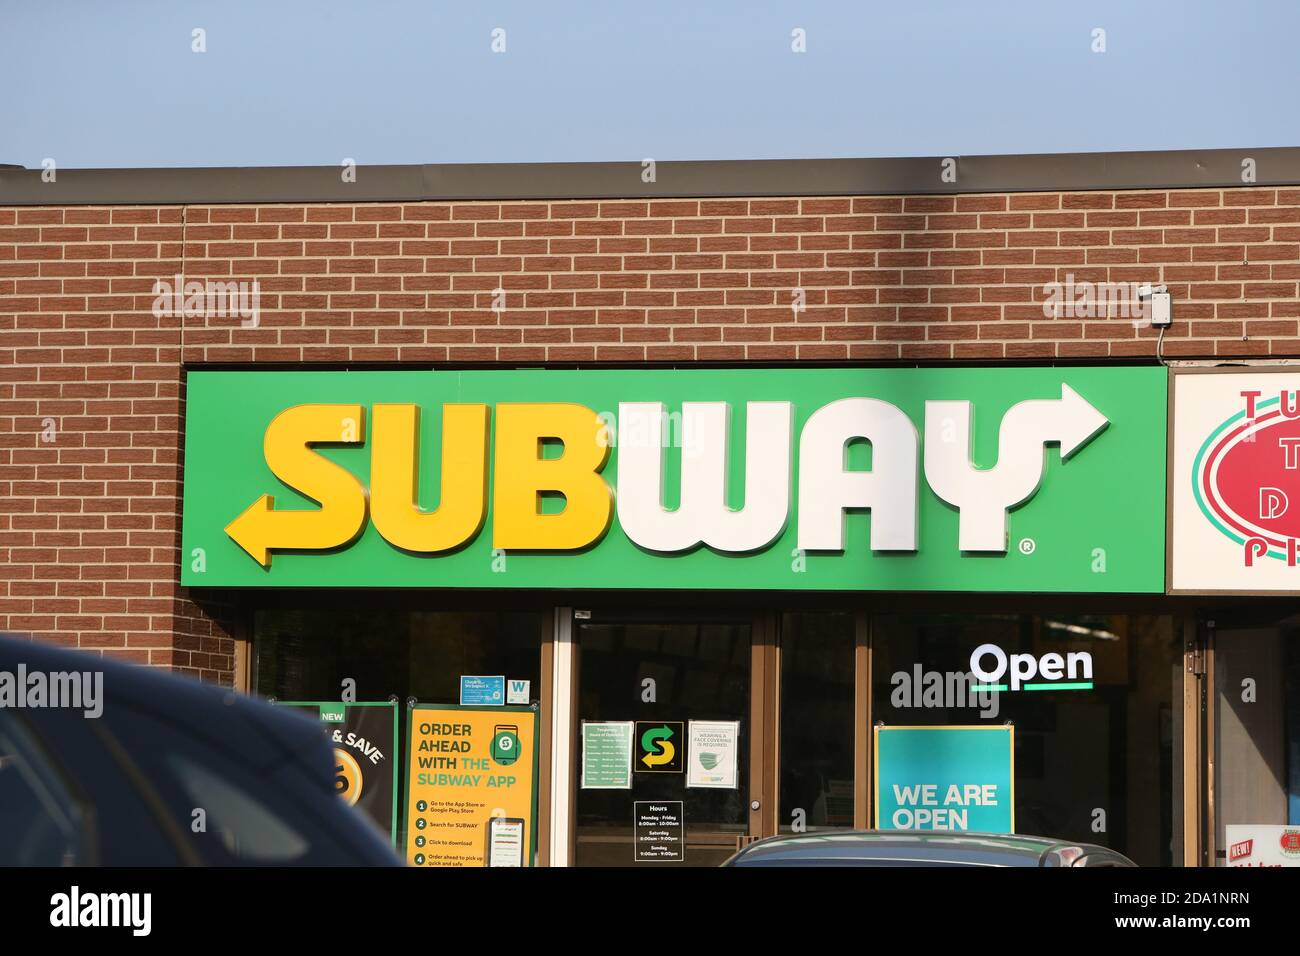 Subway Sign. London Ontario Canada Luke Durda/Alamy Stock Photo